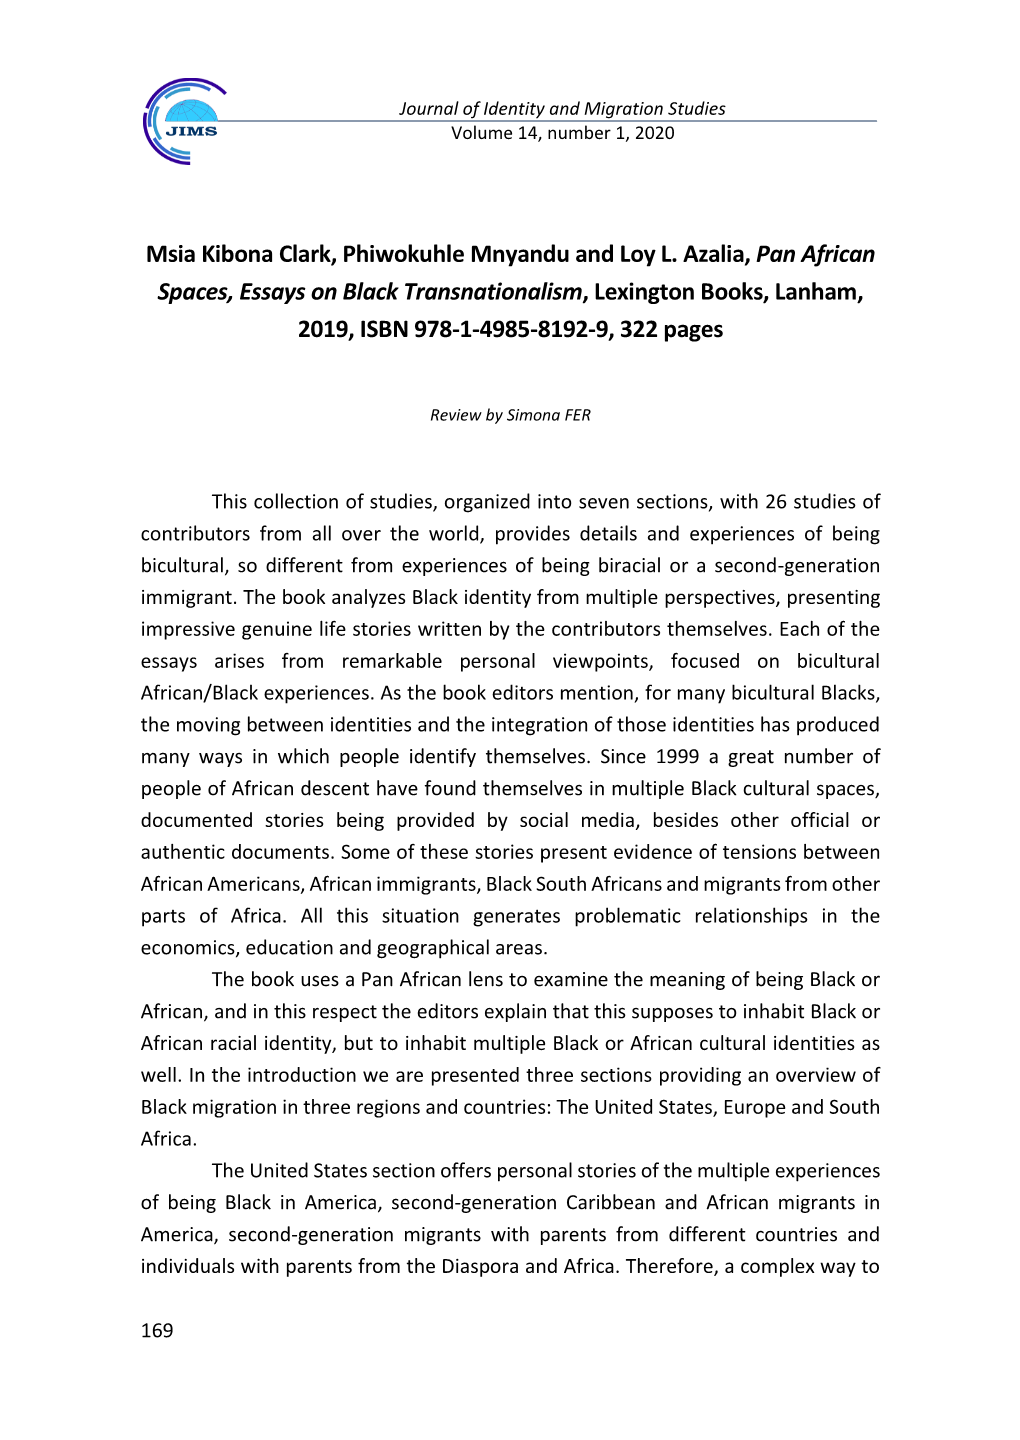 Msia Kibona Clark, Phiwokuhle Mnyandu and Loy L. Azalia, Pan African Spaces, Essays on Black Transnationalism